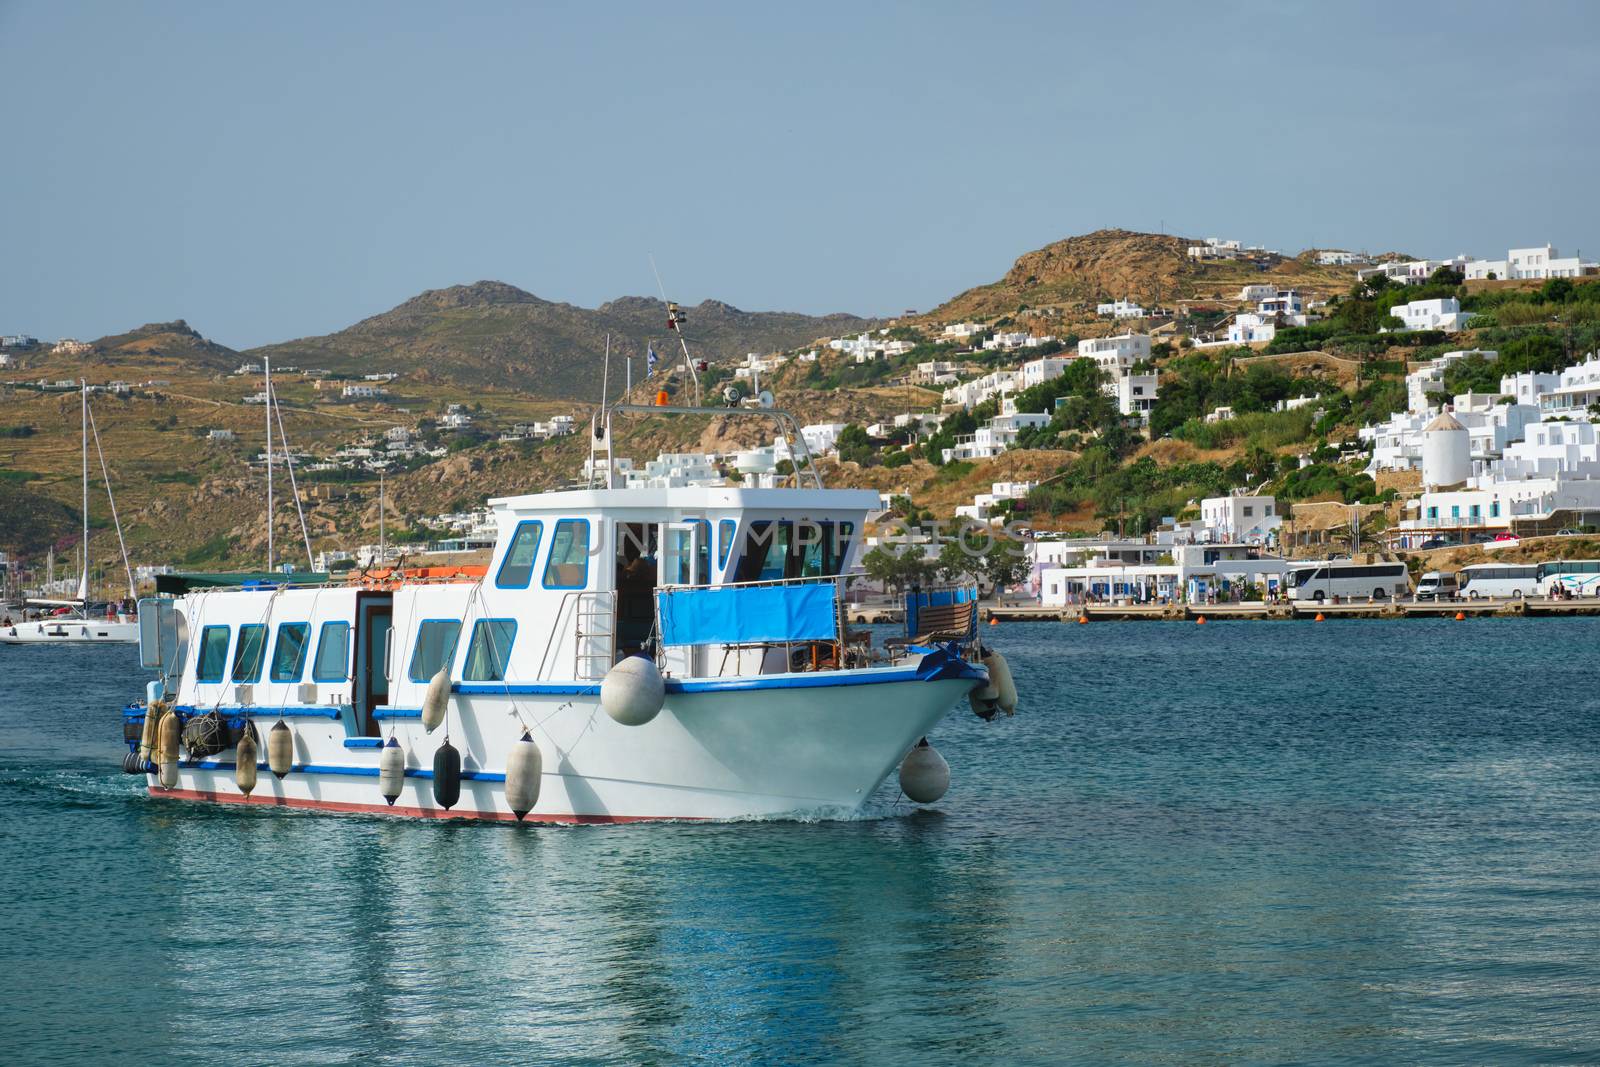 Boat in port harbor of Chora town on Mykonos island, Greece by dimol